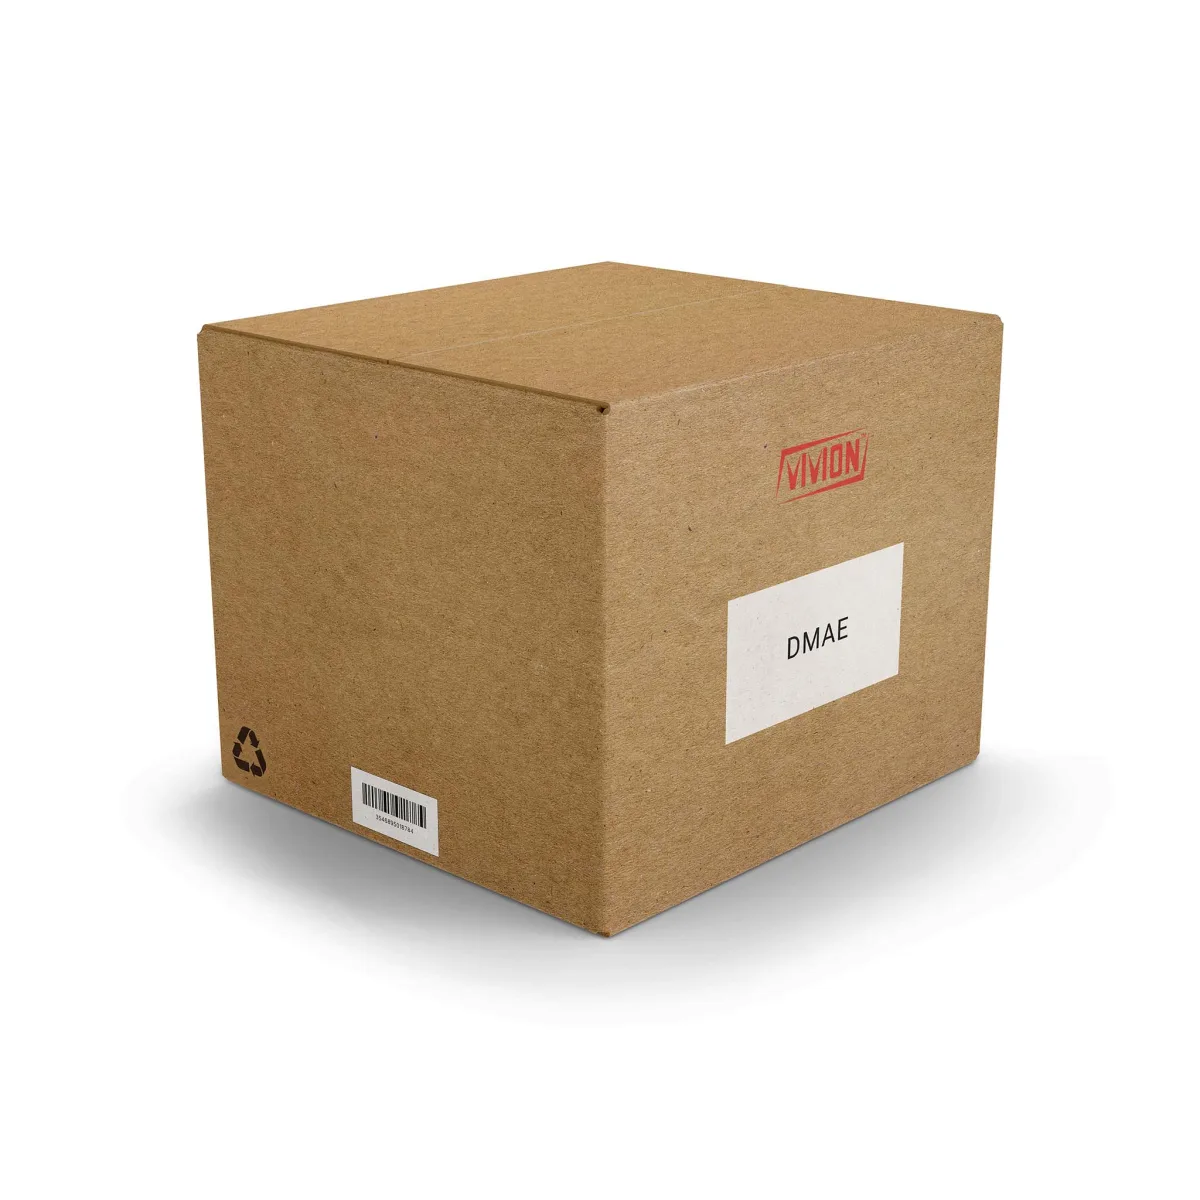 Box of Vivion's wholesale DMAE.